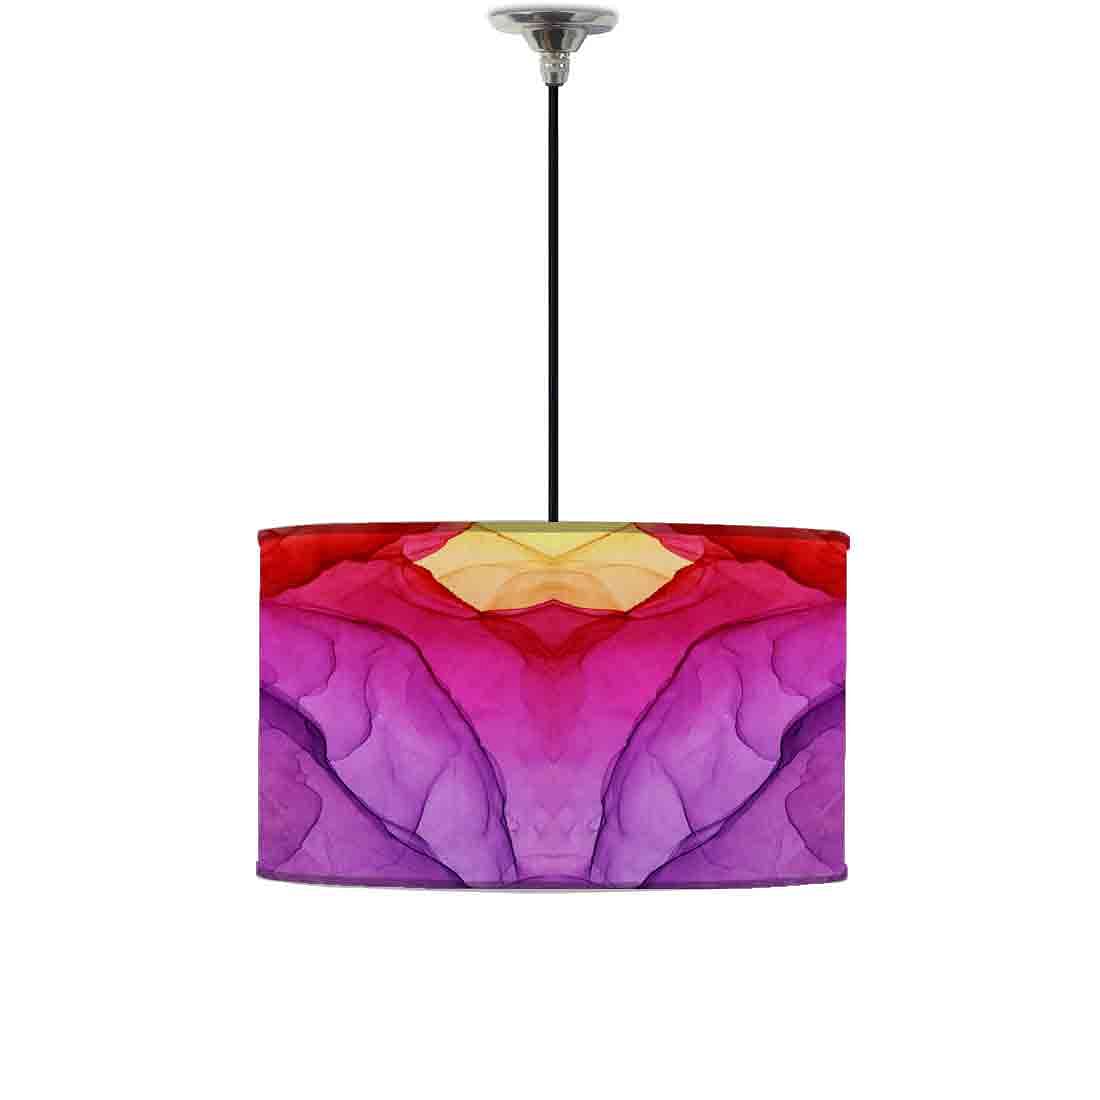 Ceiling Lamp Hanging Drum Lampshade - Purple Yellow Ink Watercolor Nutcase